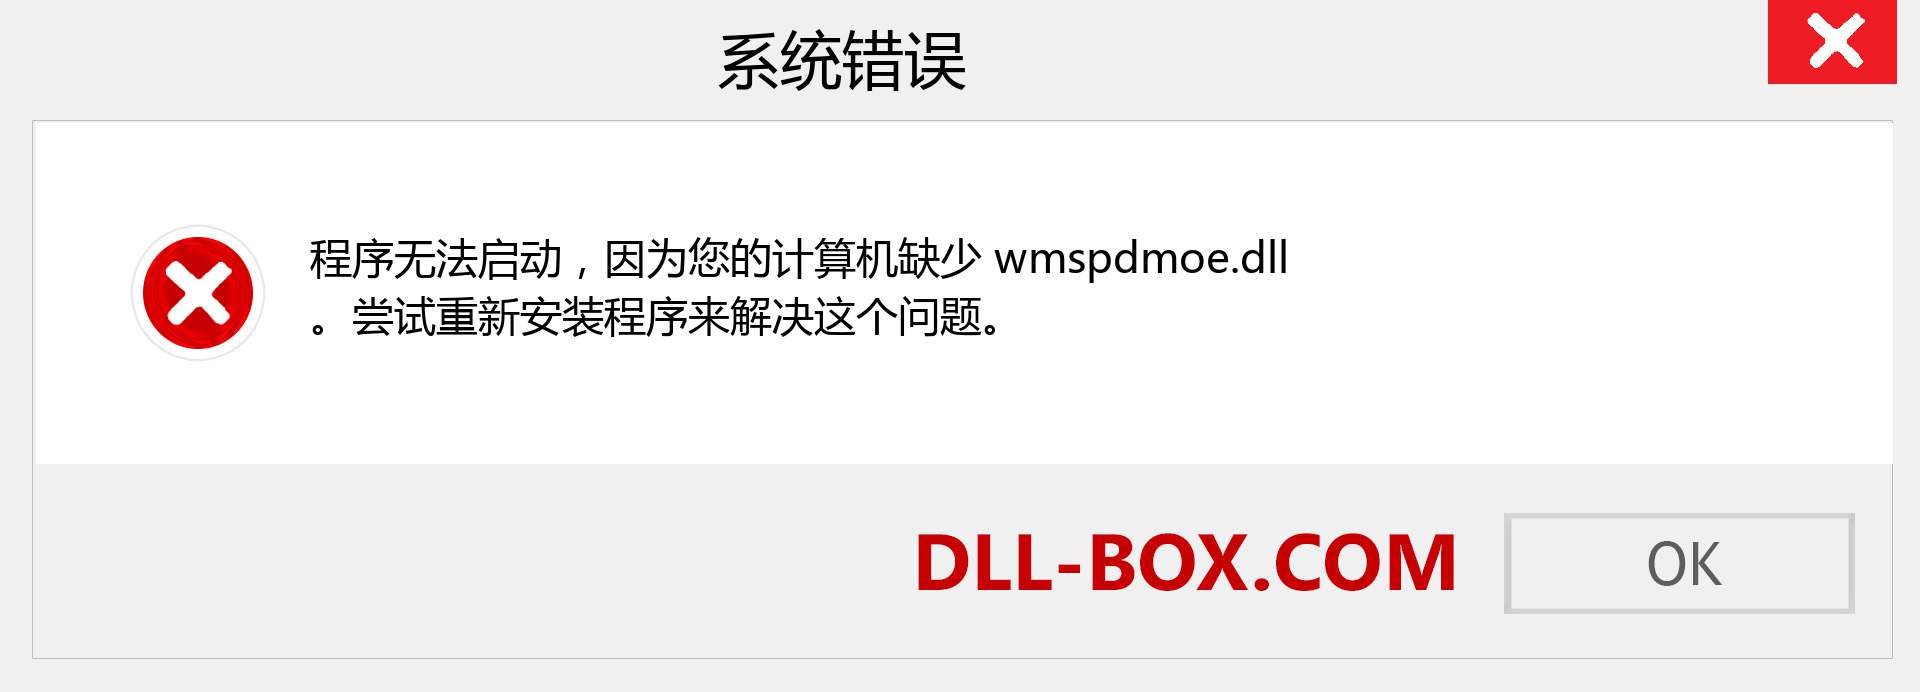 wmspdmoe.dll 文件丢失？。 适用于 Windows 7、8、10 的下载 - 修复 Windows、照片、图像上的 wmspdmoe dll 丢失错误